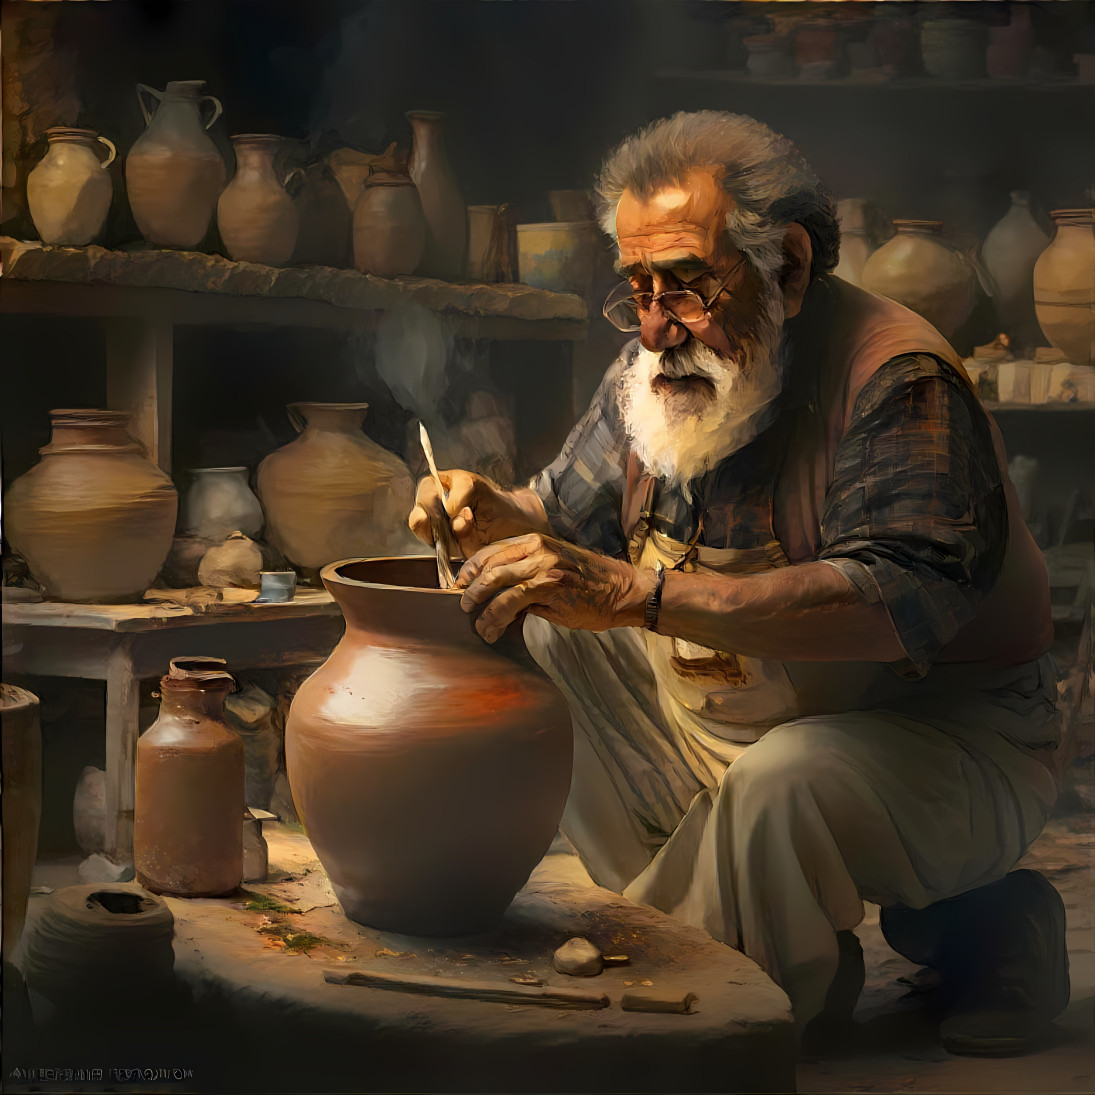 Greek potterymaker, in the style of Goya